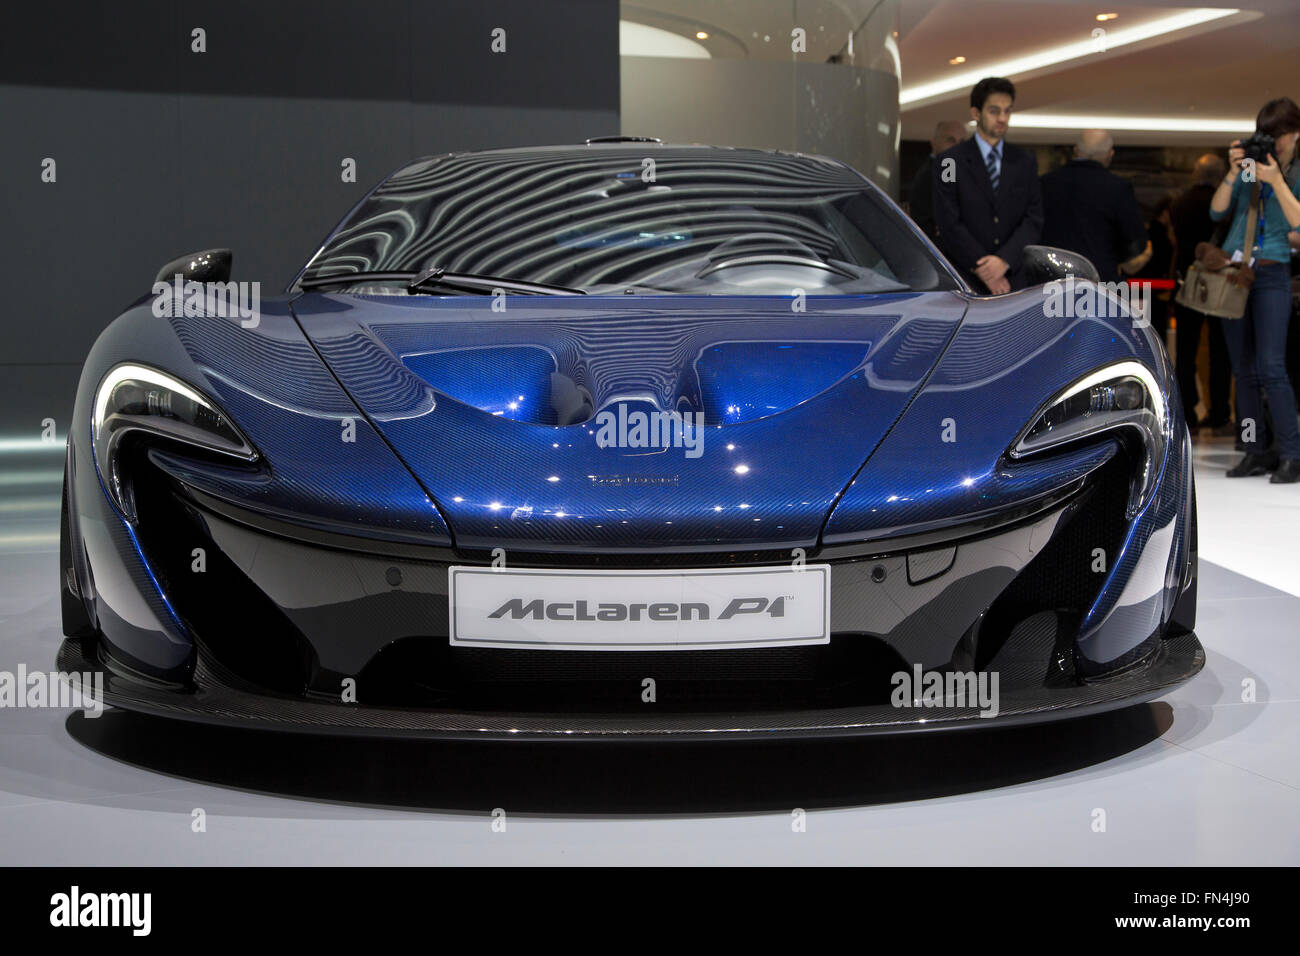 McLaren P1 supercar at the Geneva Motor Show 2016 Stock Photo